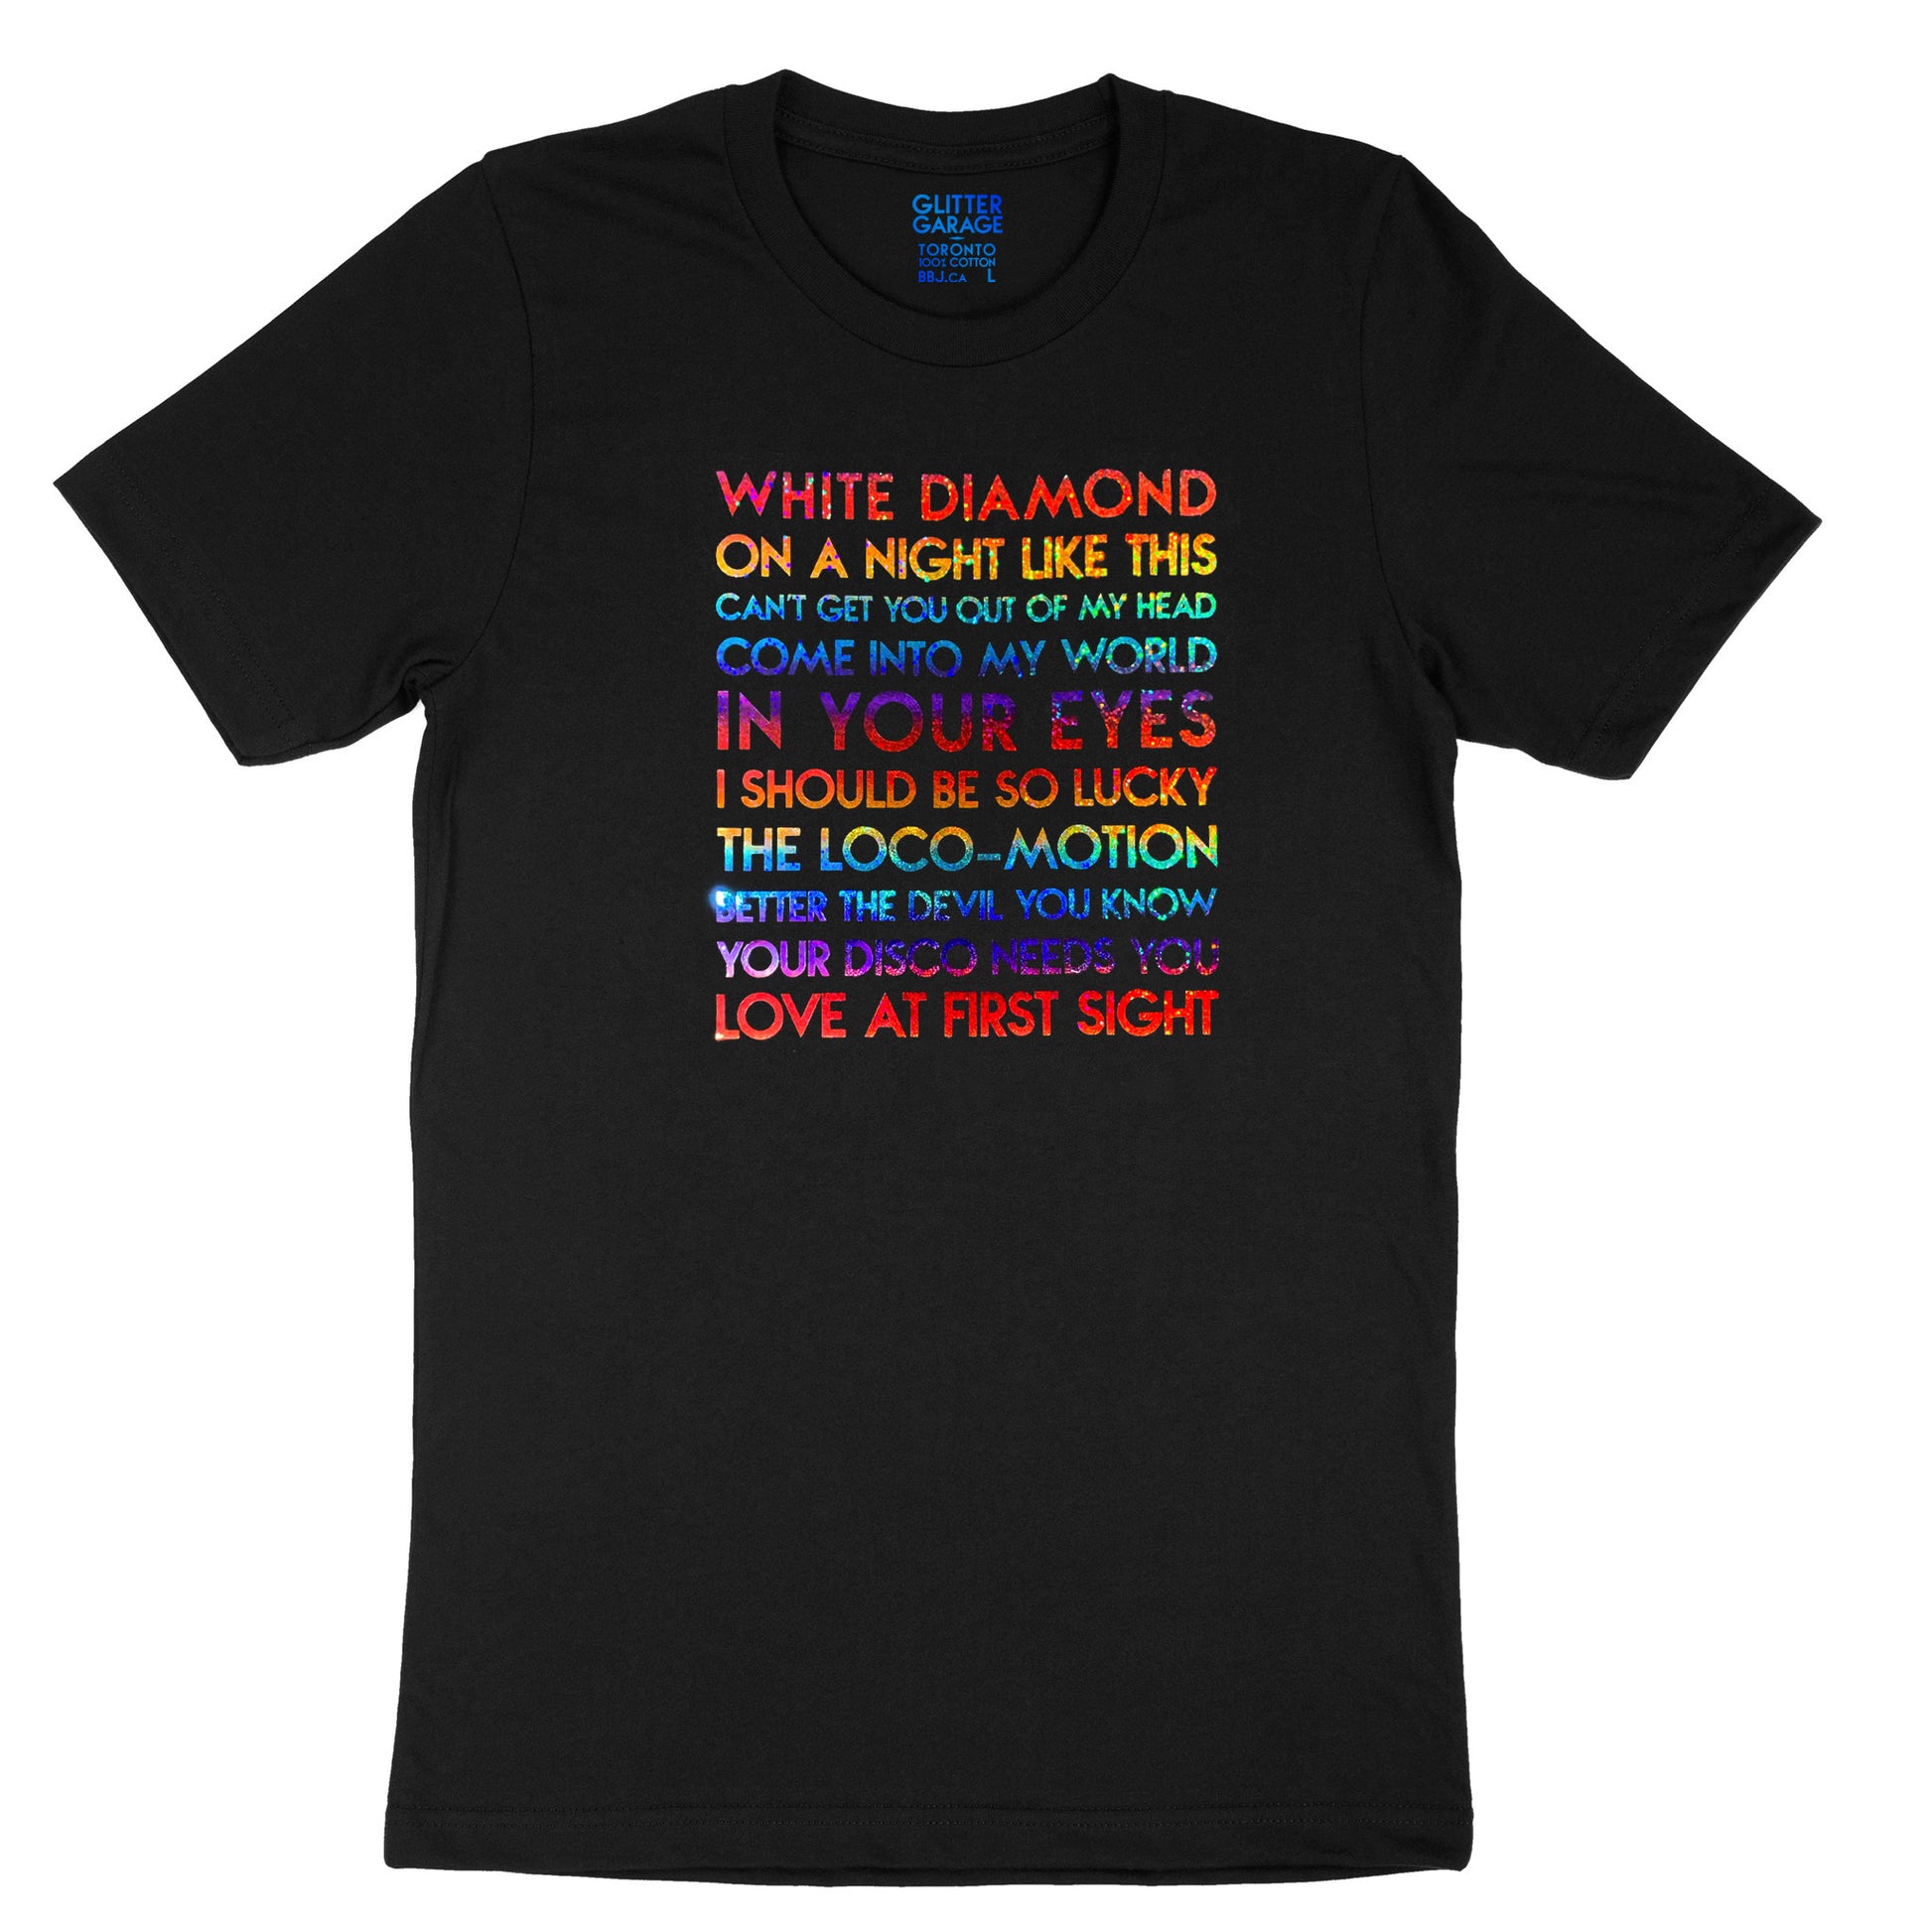 Kylie songs YourTen custom sample - rainbow holographic text on black unisex t-shirt -  by BBJ / Glitter Garage